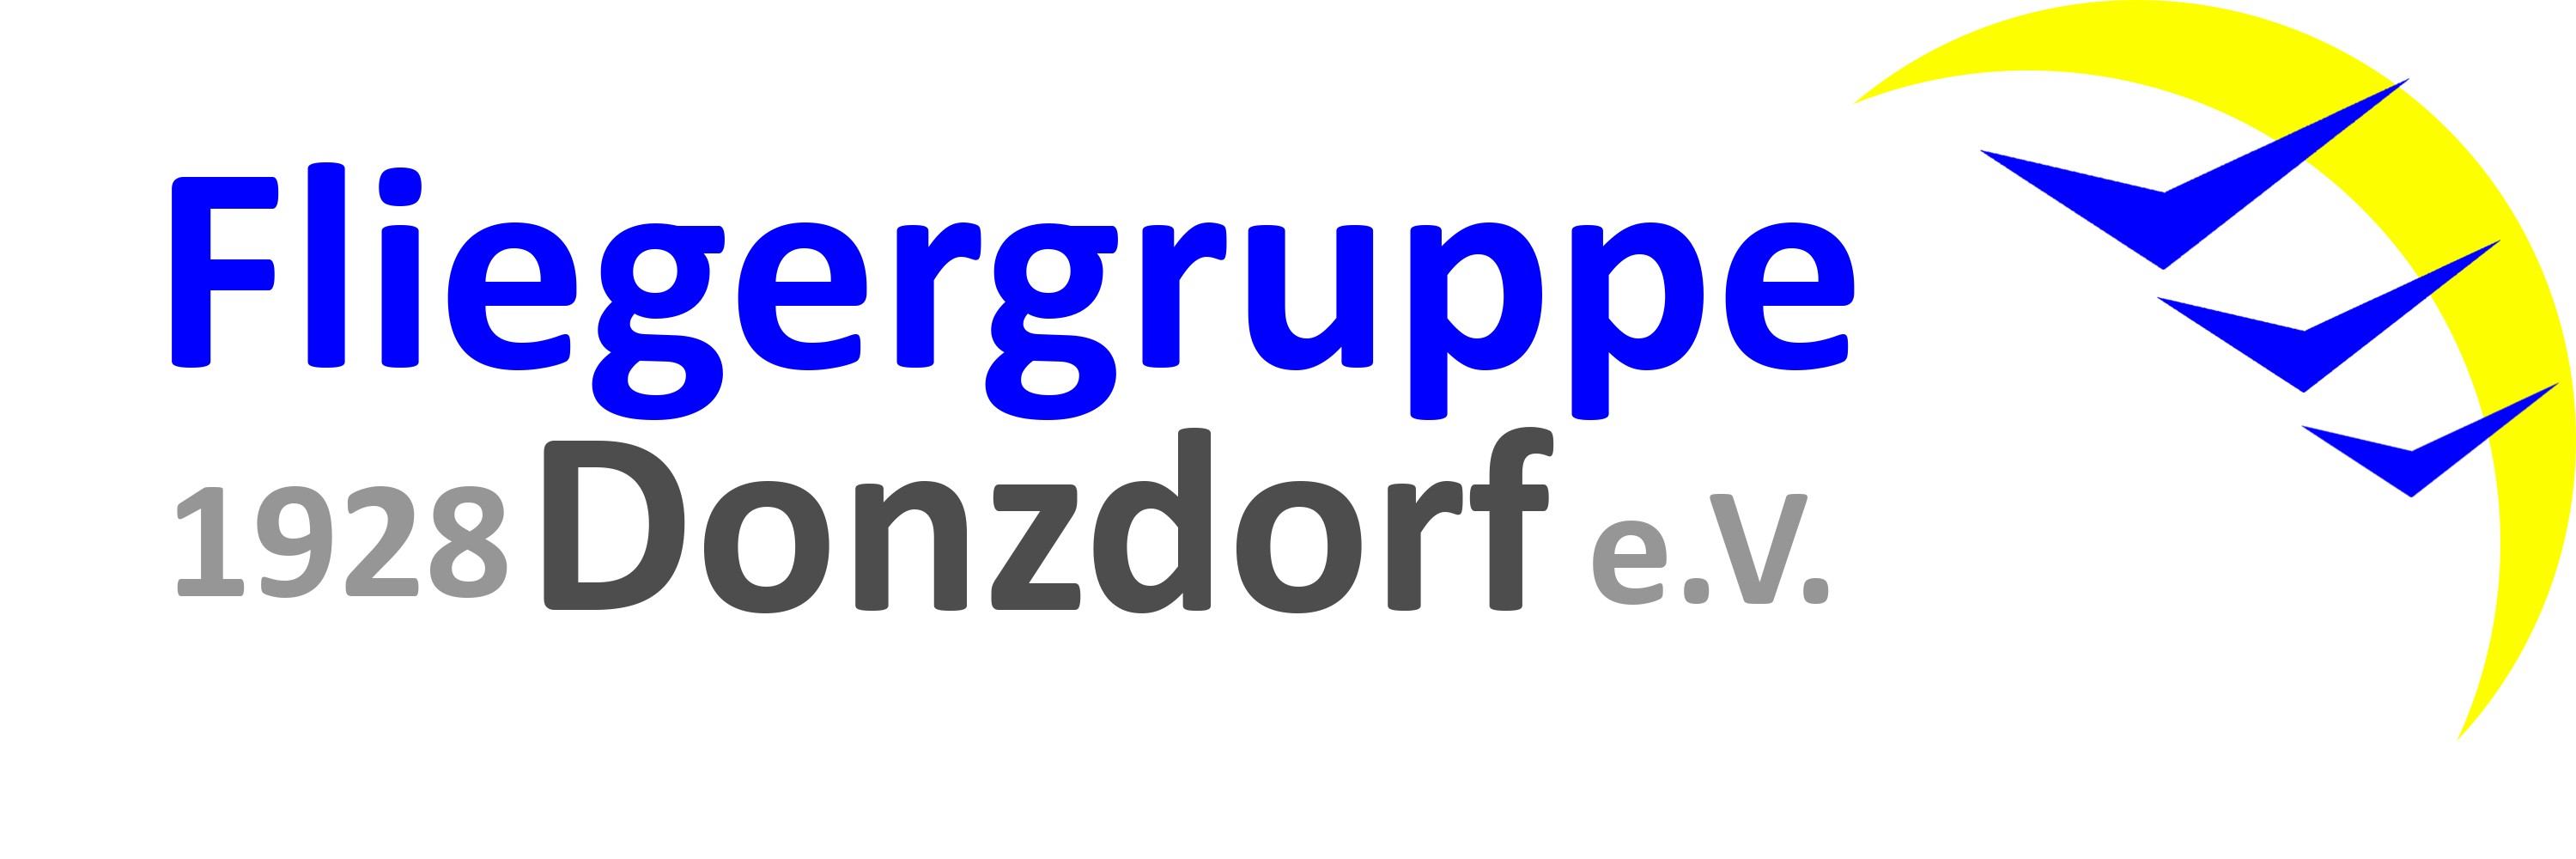 Fliegergruppe Donzdorf